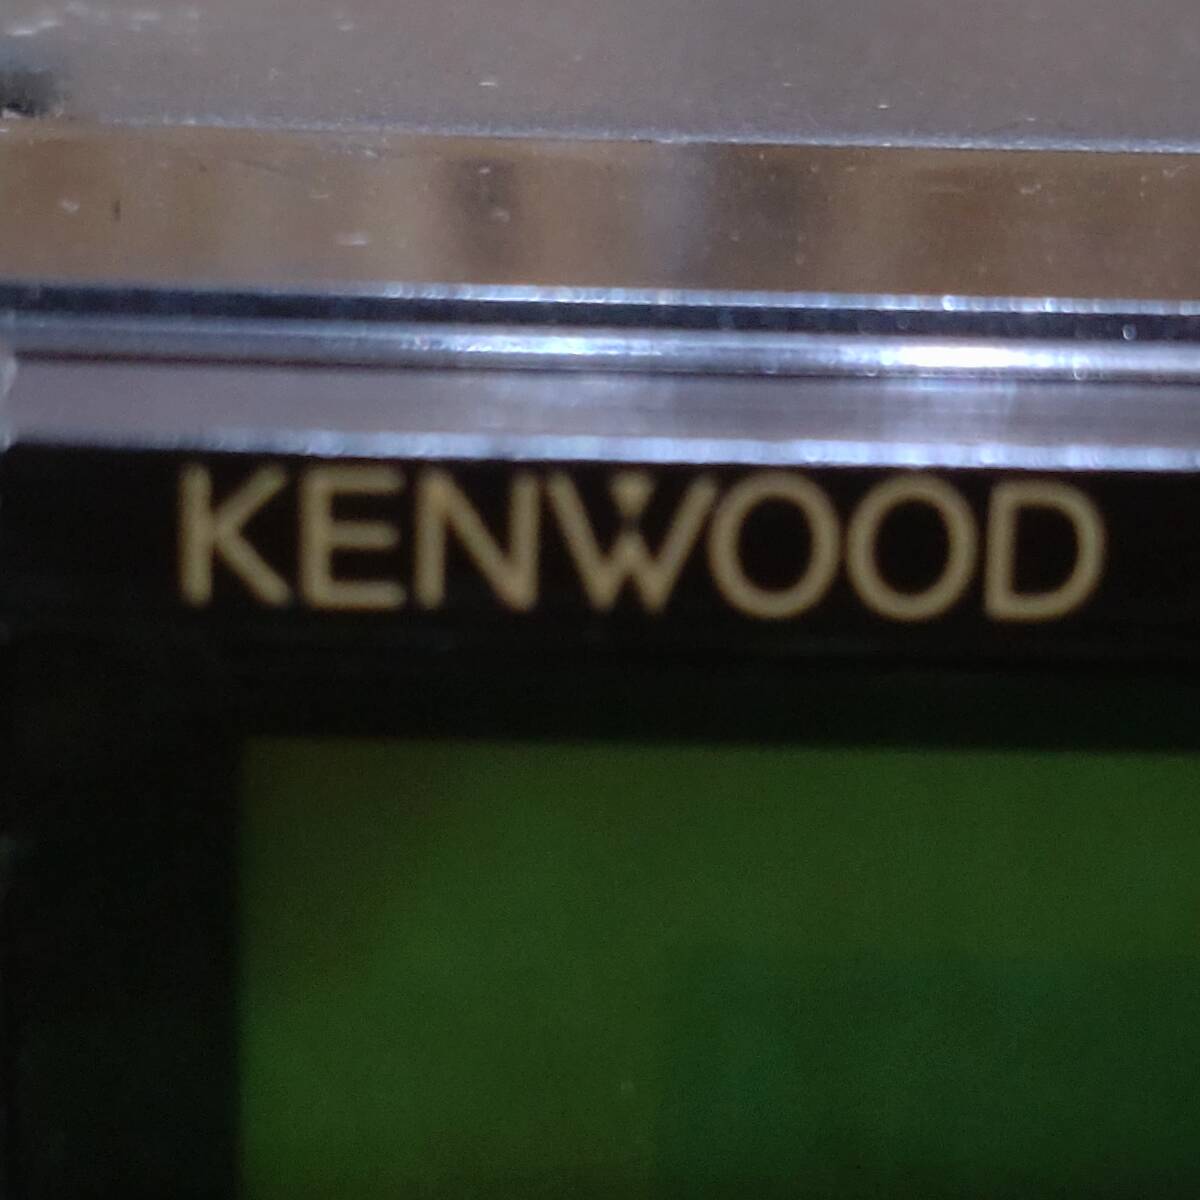 KENWOOD Kenwood TR-751 144MHz all mode текущее состояние товар [T17719]